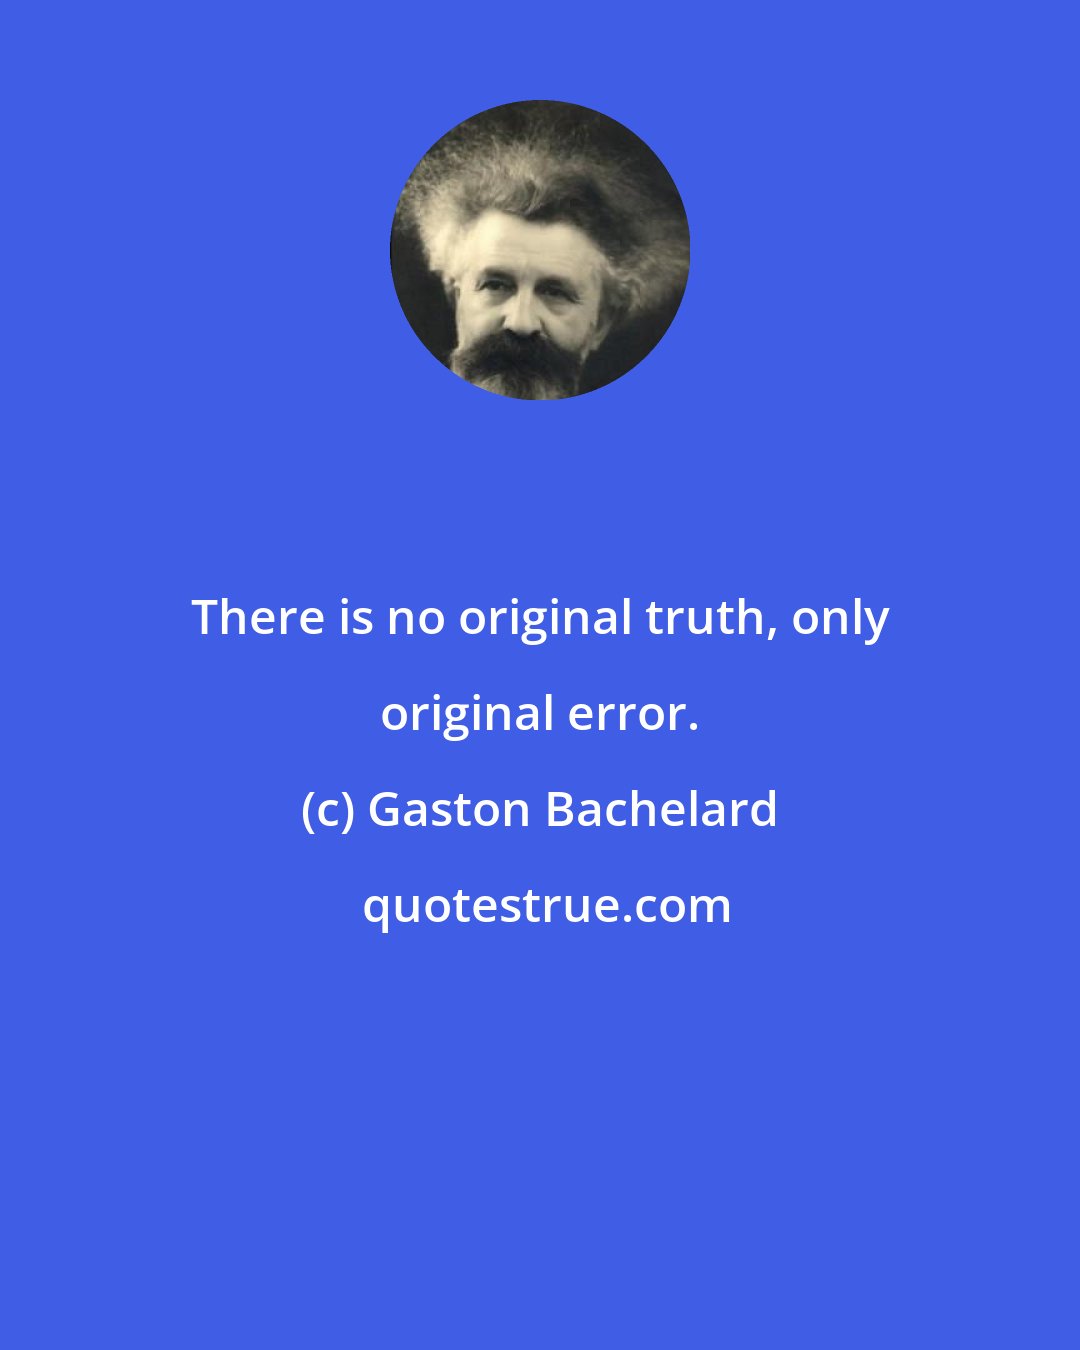 Gaston Bachelard: There is no original truth, only original error.